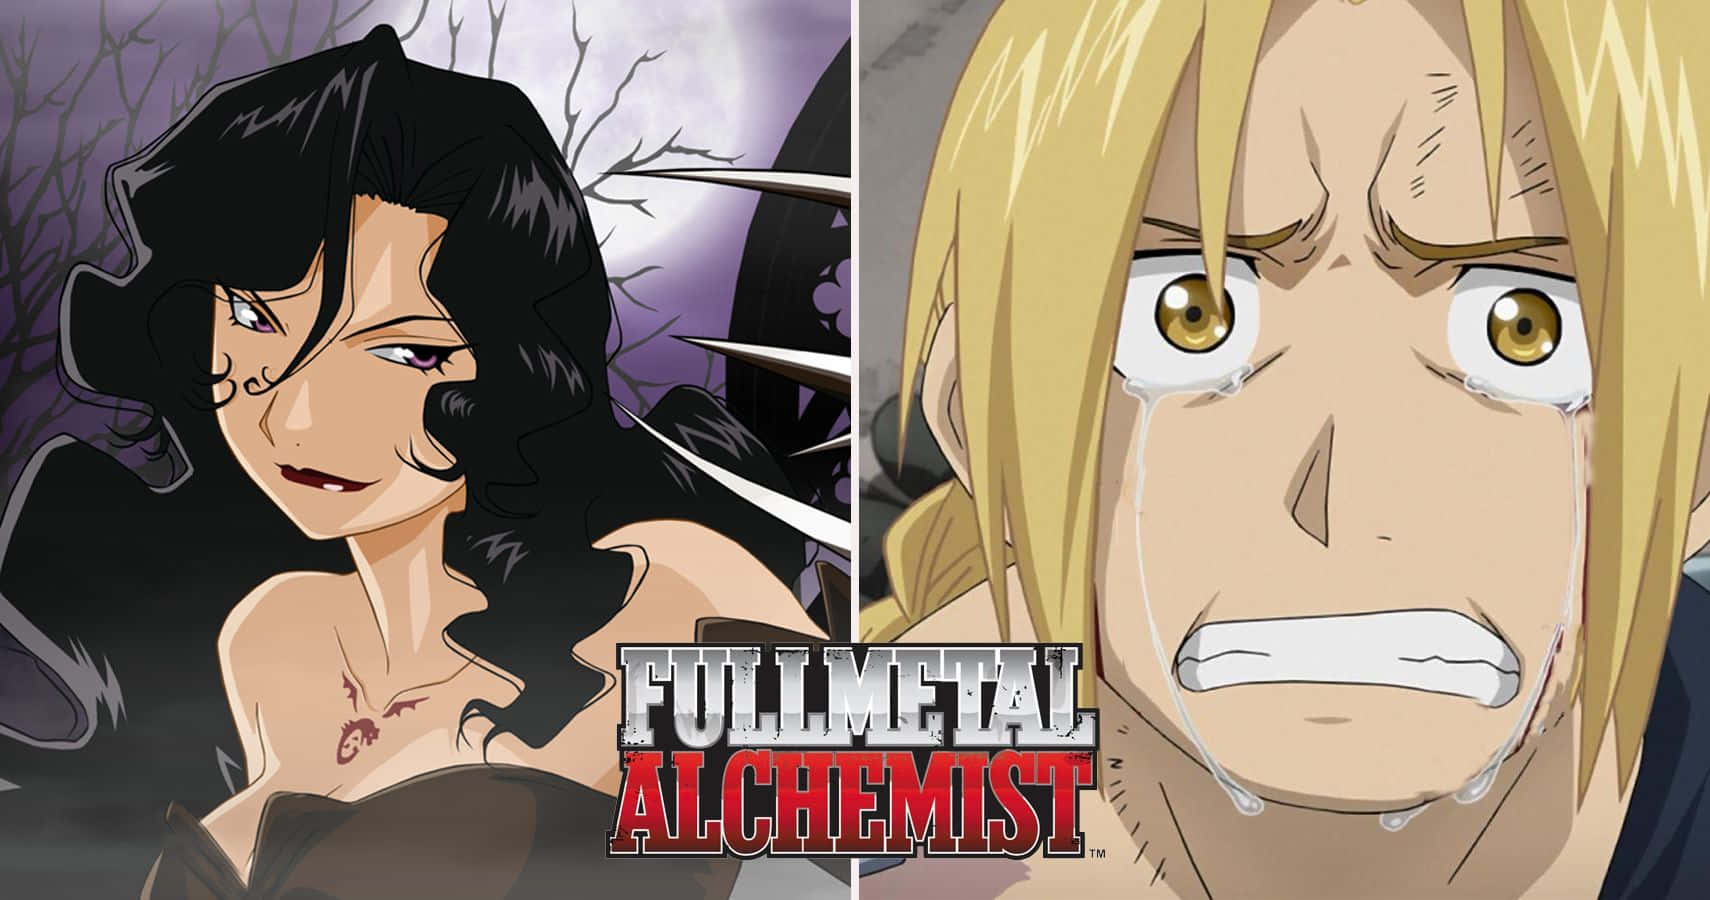 Imagende Fullmetal Alchemist Con Reiko Akiba Y Edward.